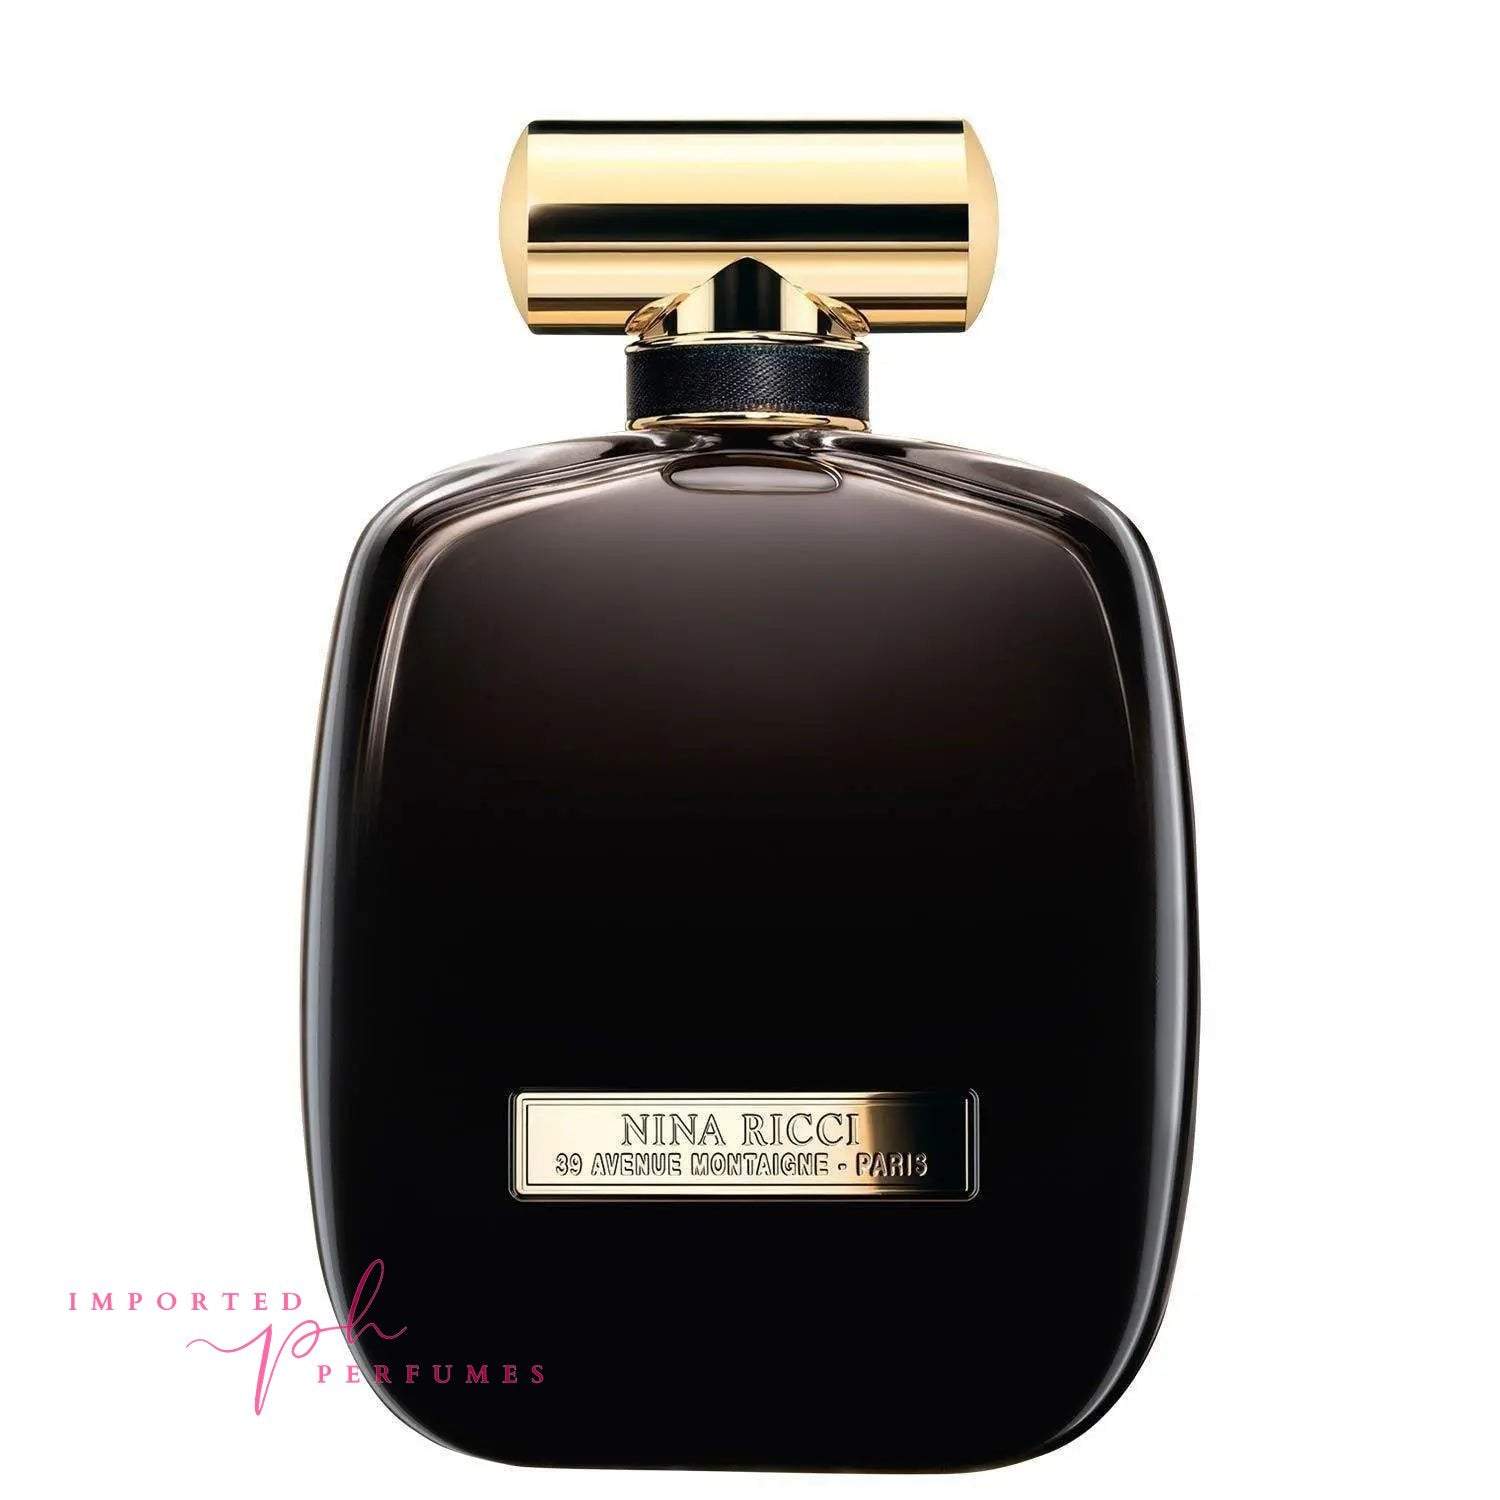 [TESTER] Nina Ricci L'Extase Rose Absolue Eau De Parfum 80ml-Imported Perfumes Co-Nina Ricci,test,TESTER,women